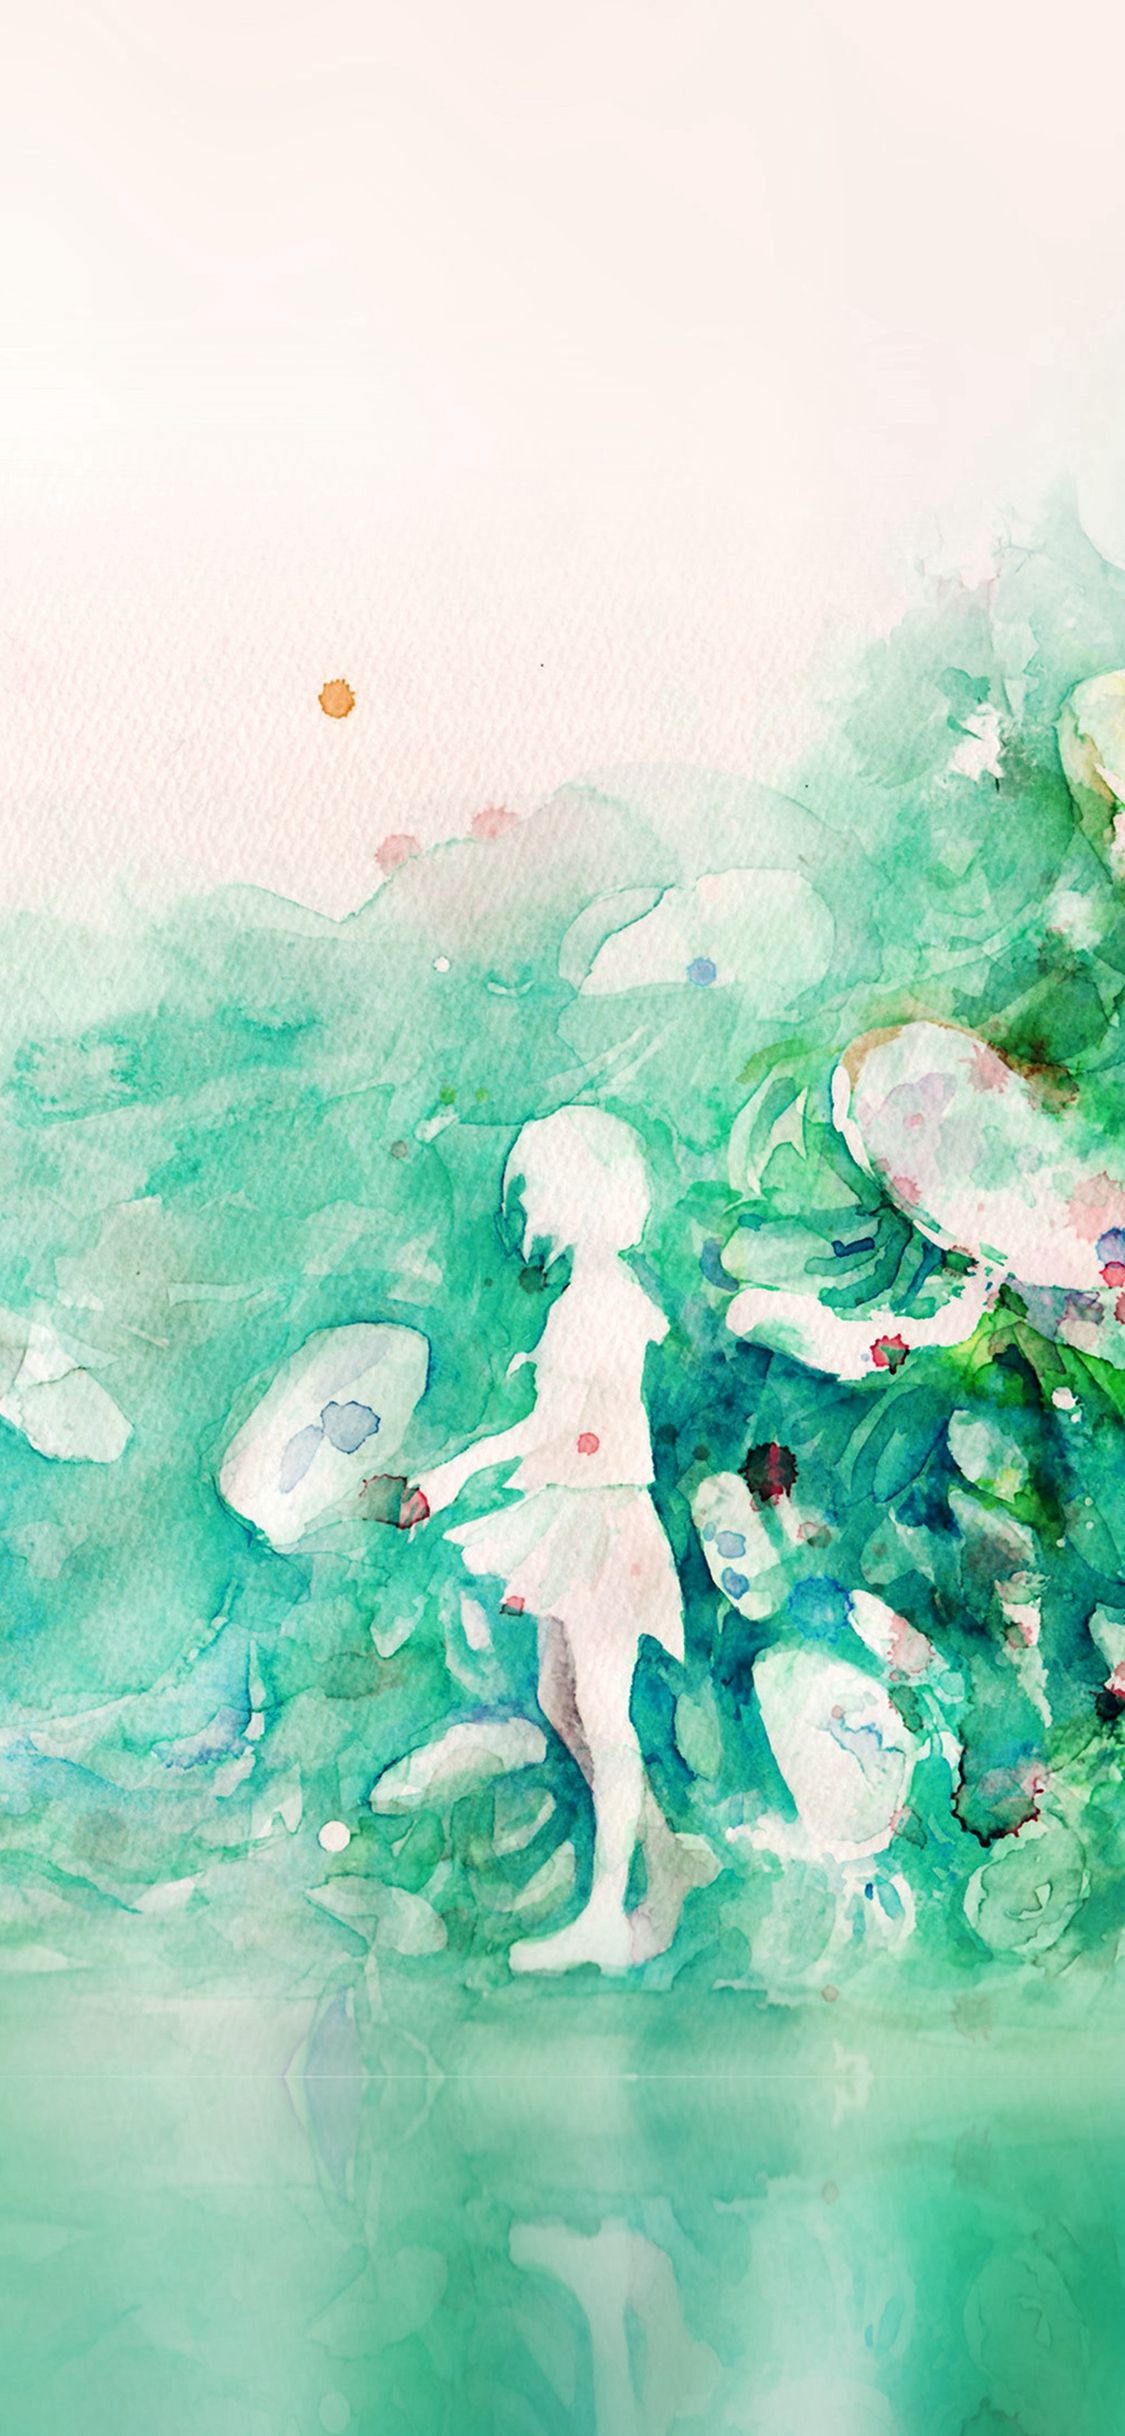 Watercolor Green Girl Nature Art Illust iPhone X Wallpaper Free